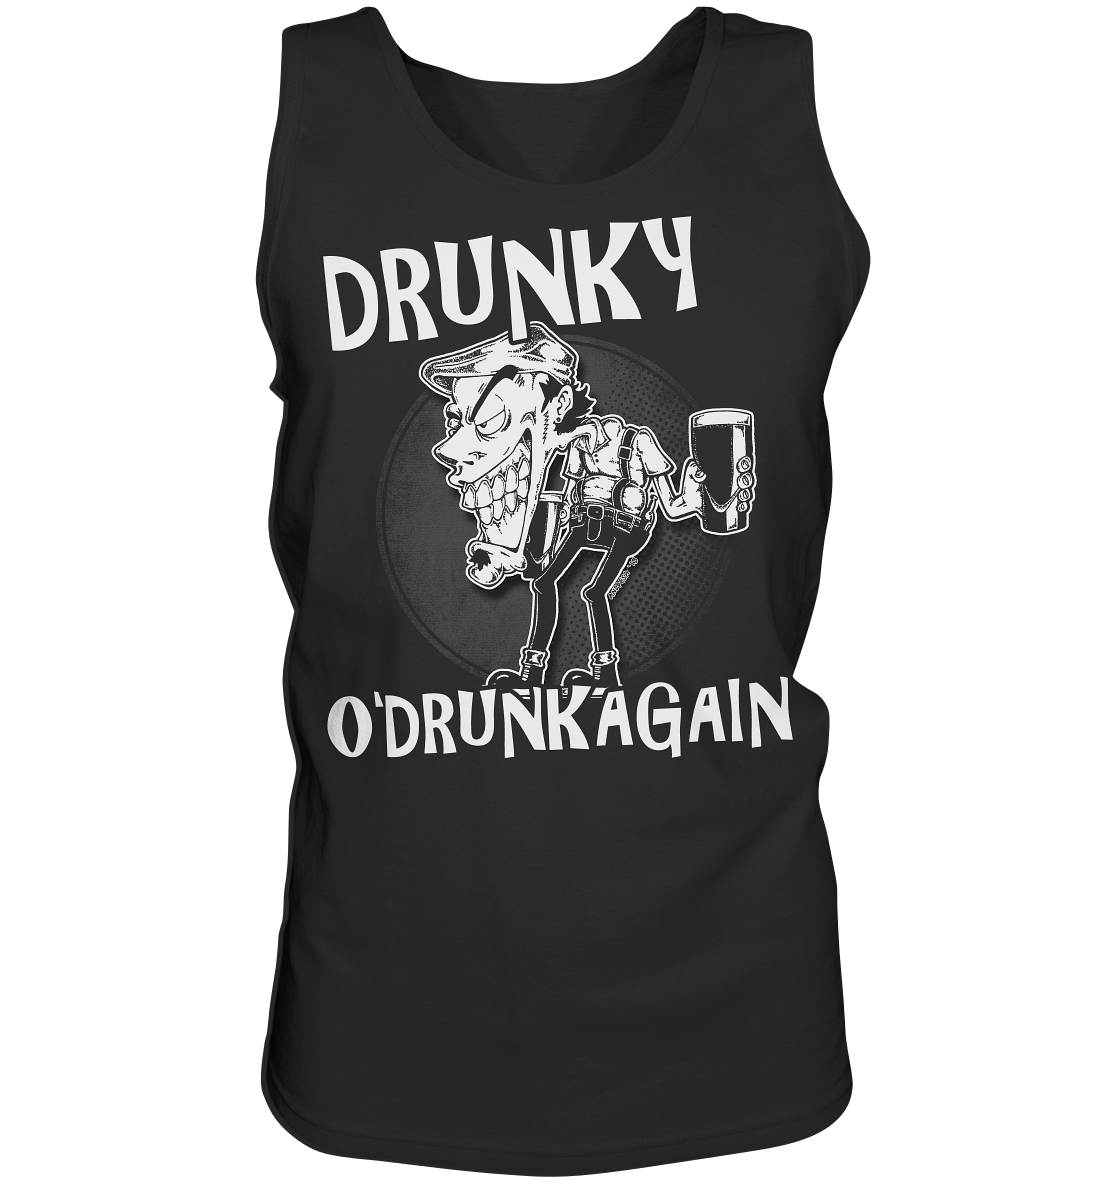 Drunky O'Drunkagain - Tank-Top